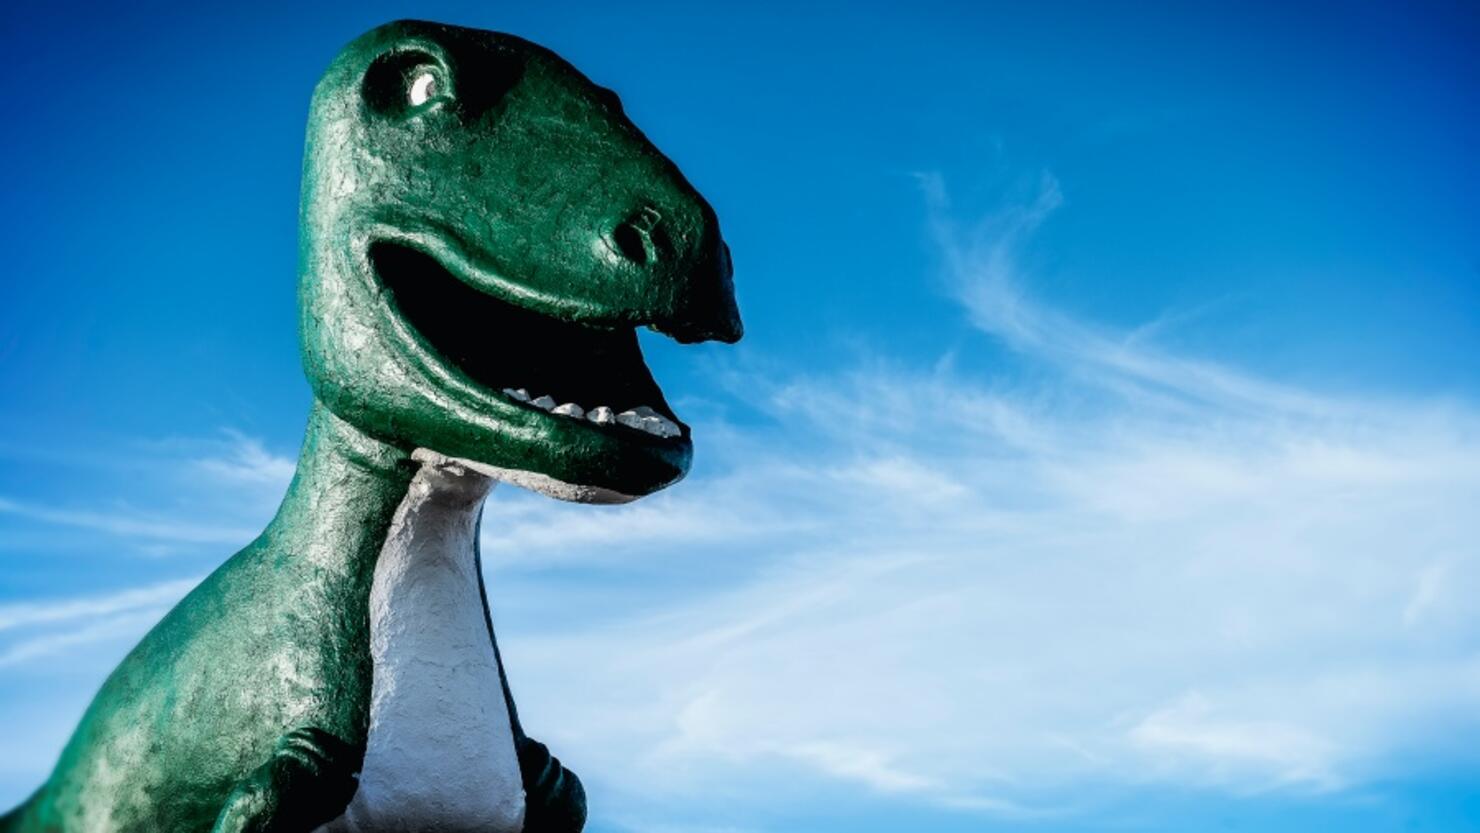 Tyrannosaurus Rex statue under blue sky